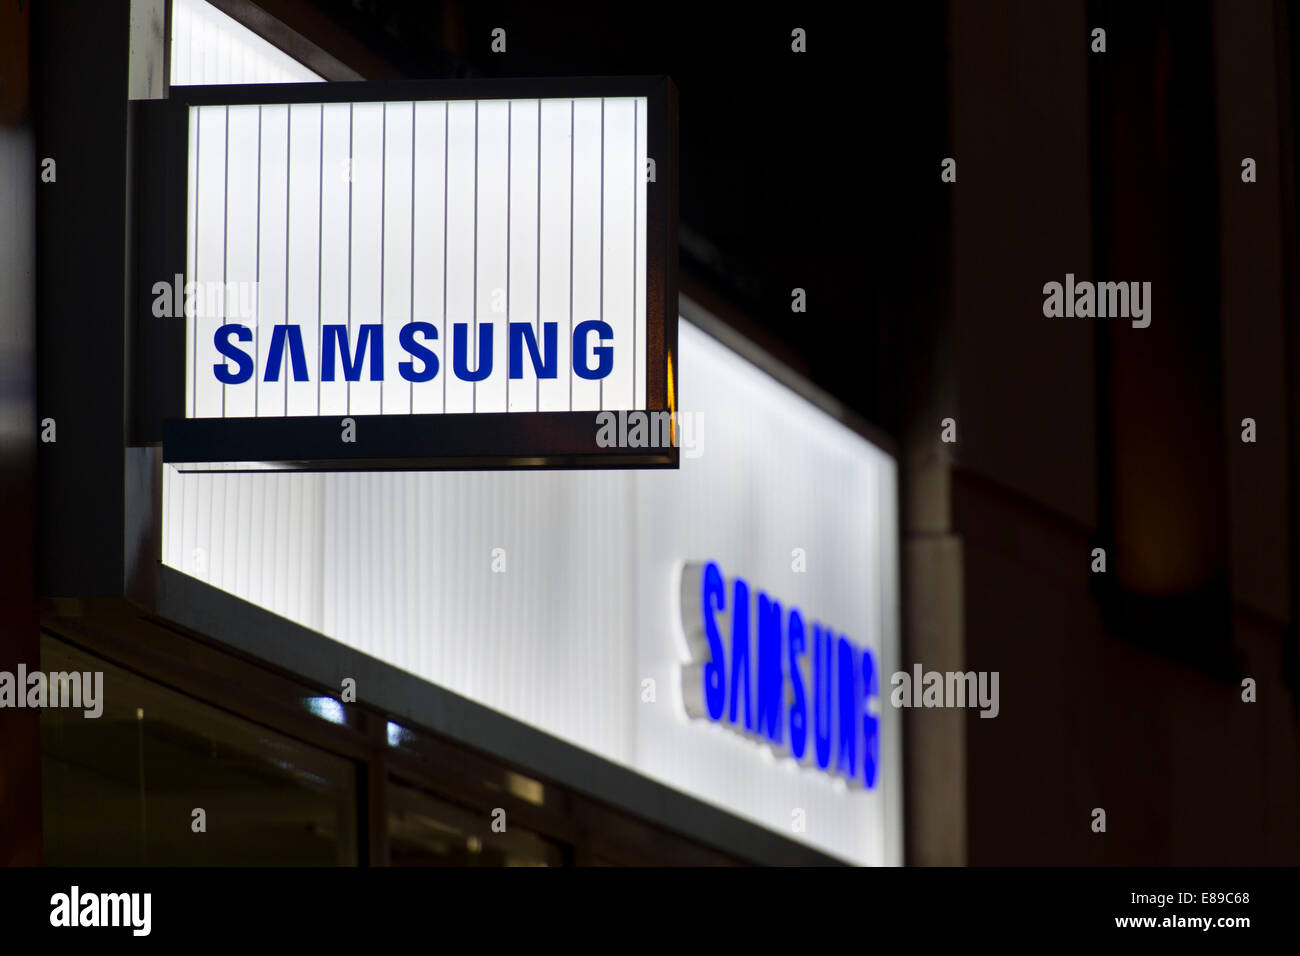 Samsung phone retail store sign. Stock Photo